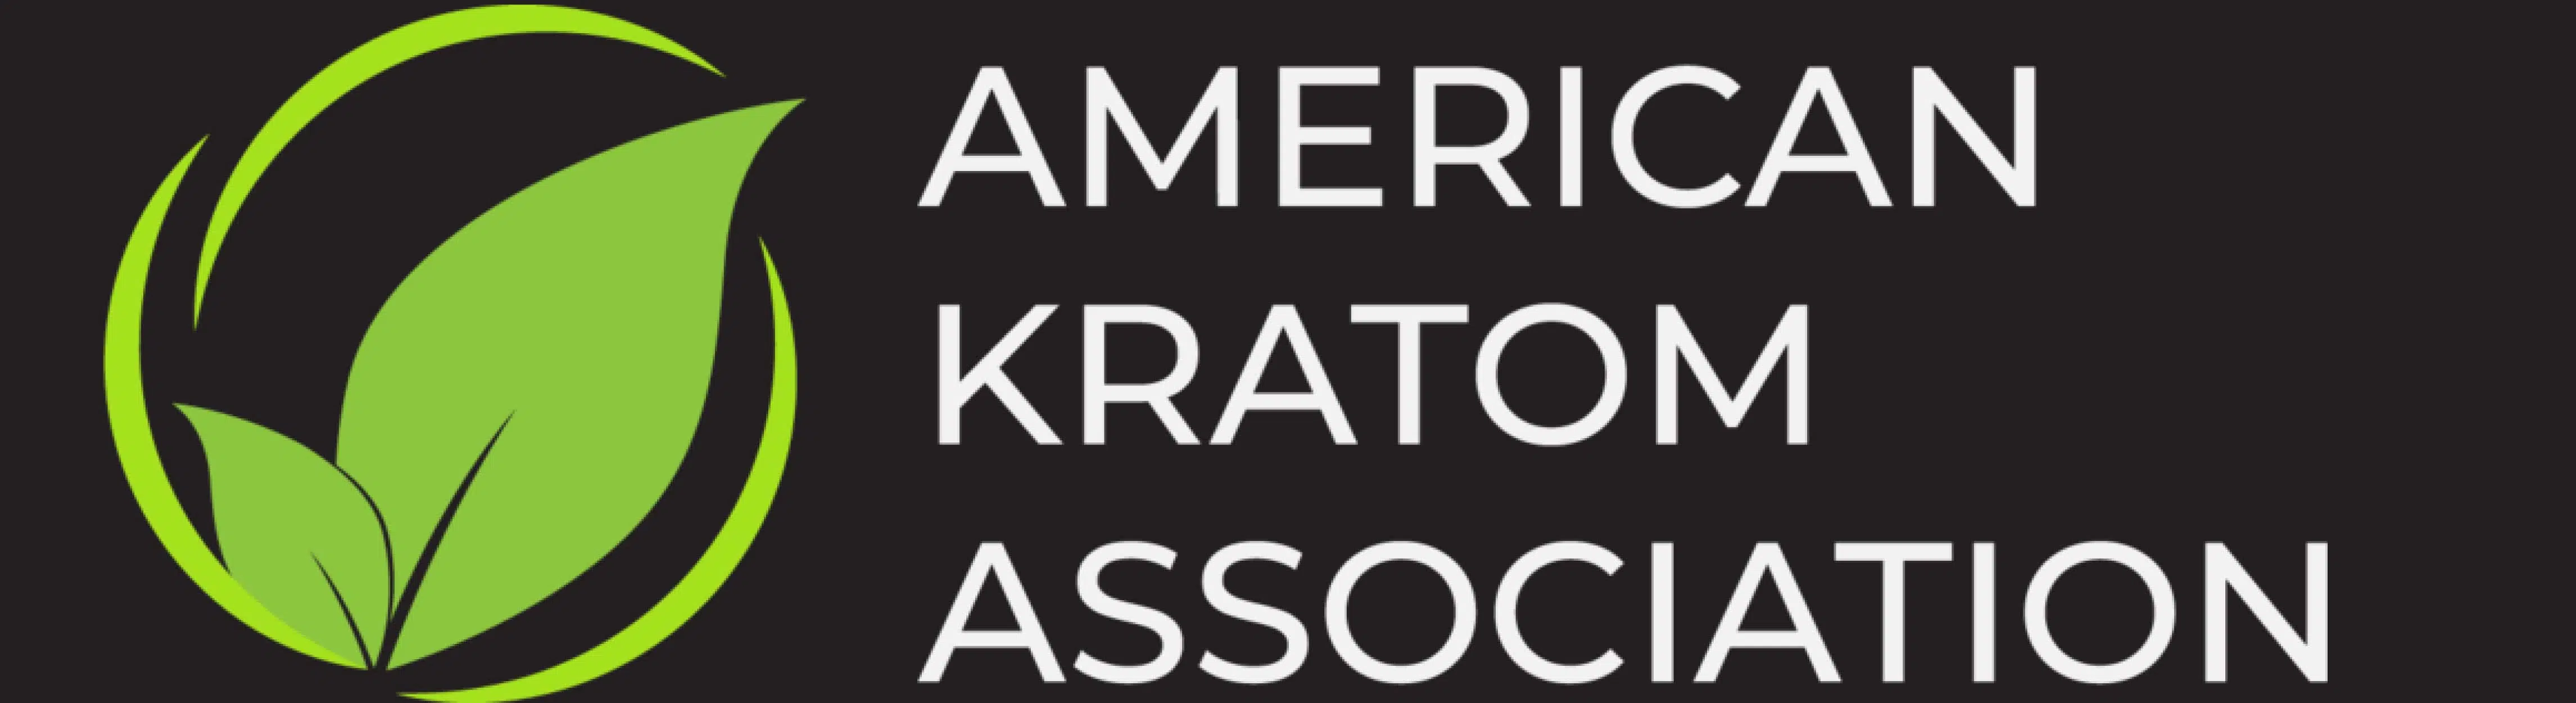 image of american kratom association